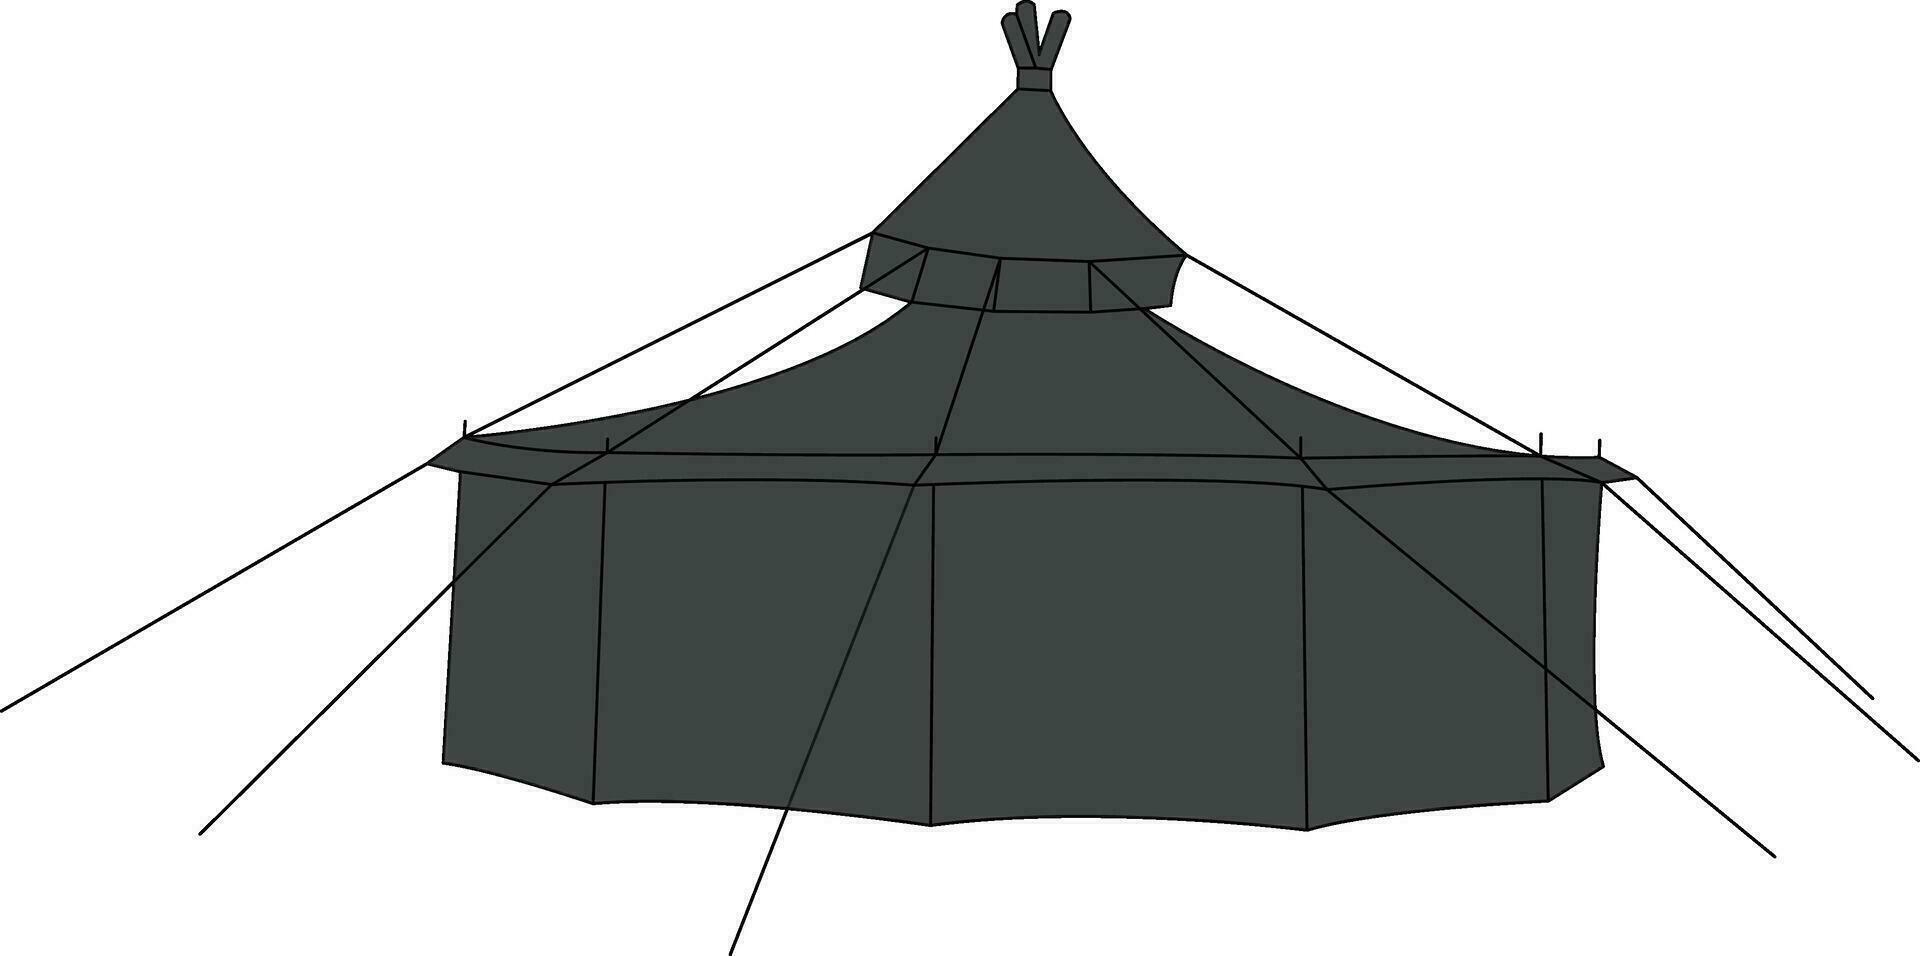 tent illustration design, art and creativity vector